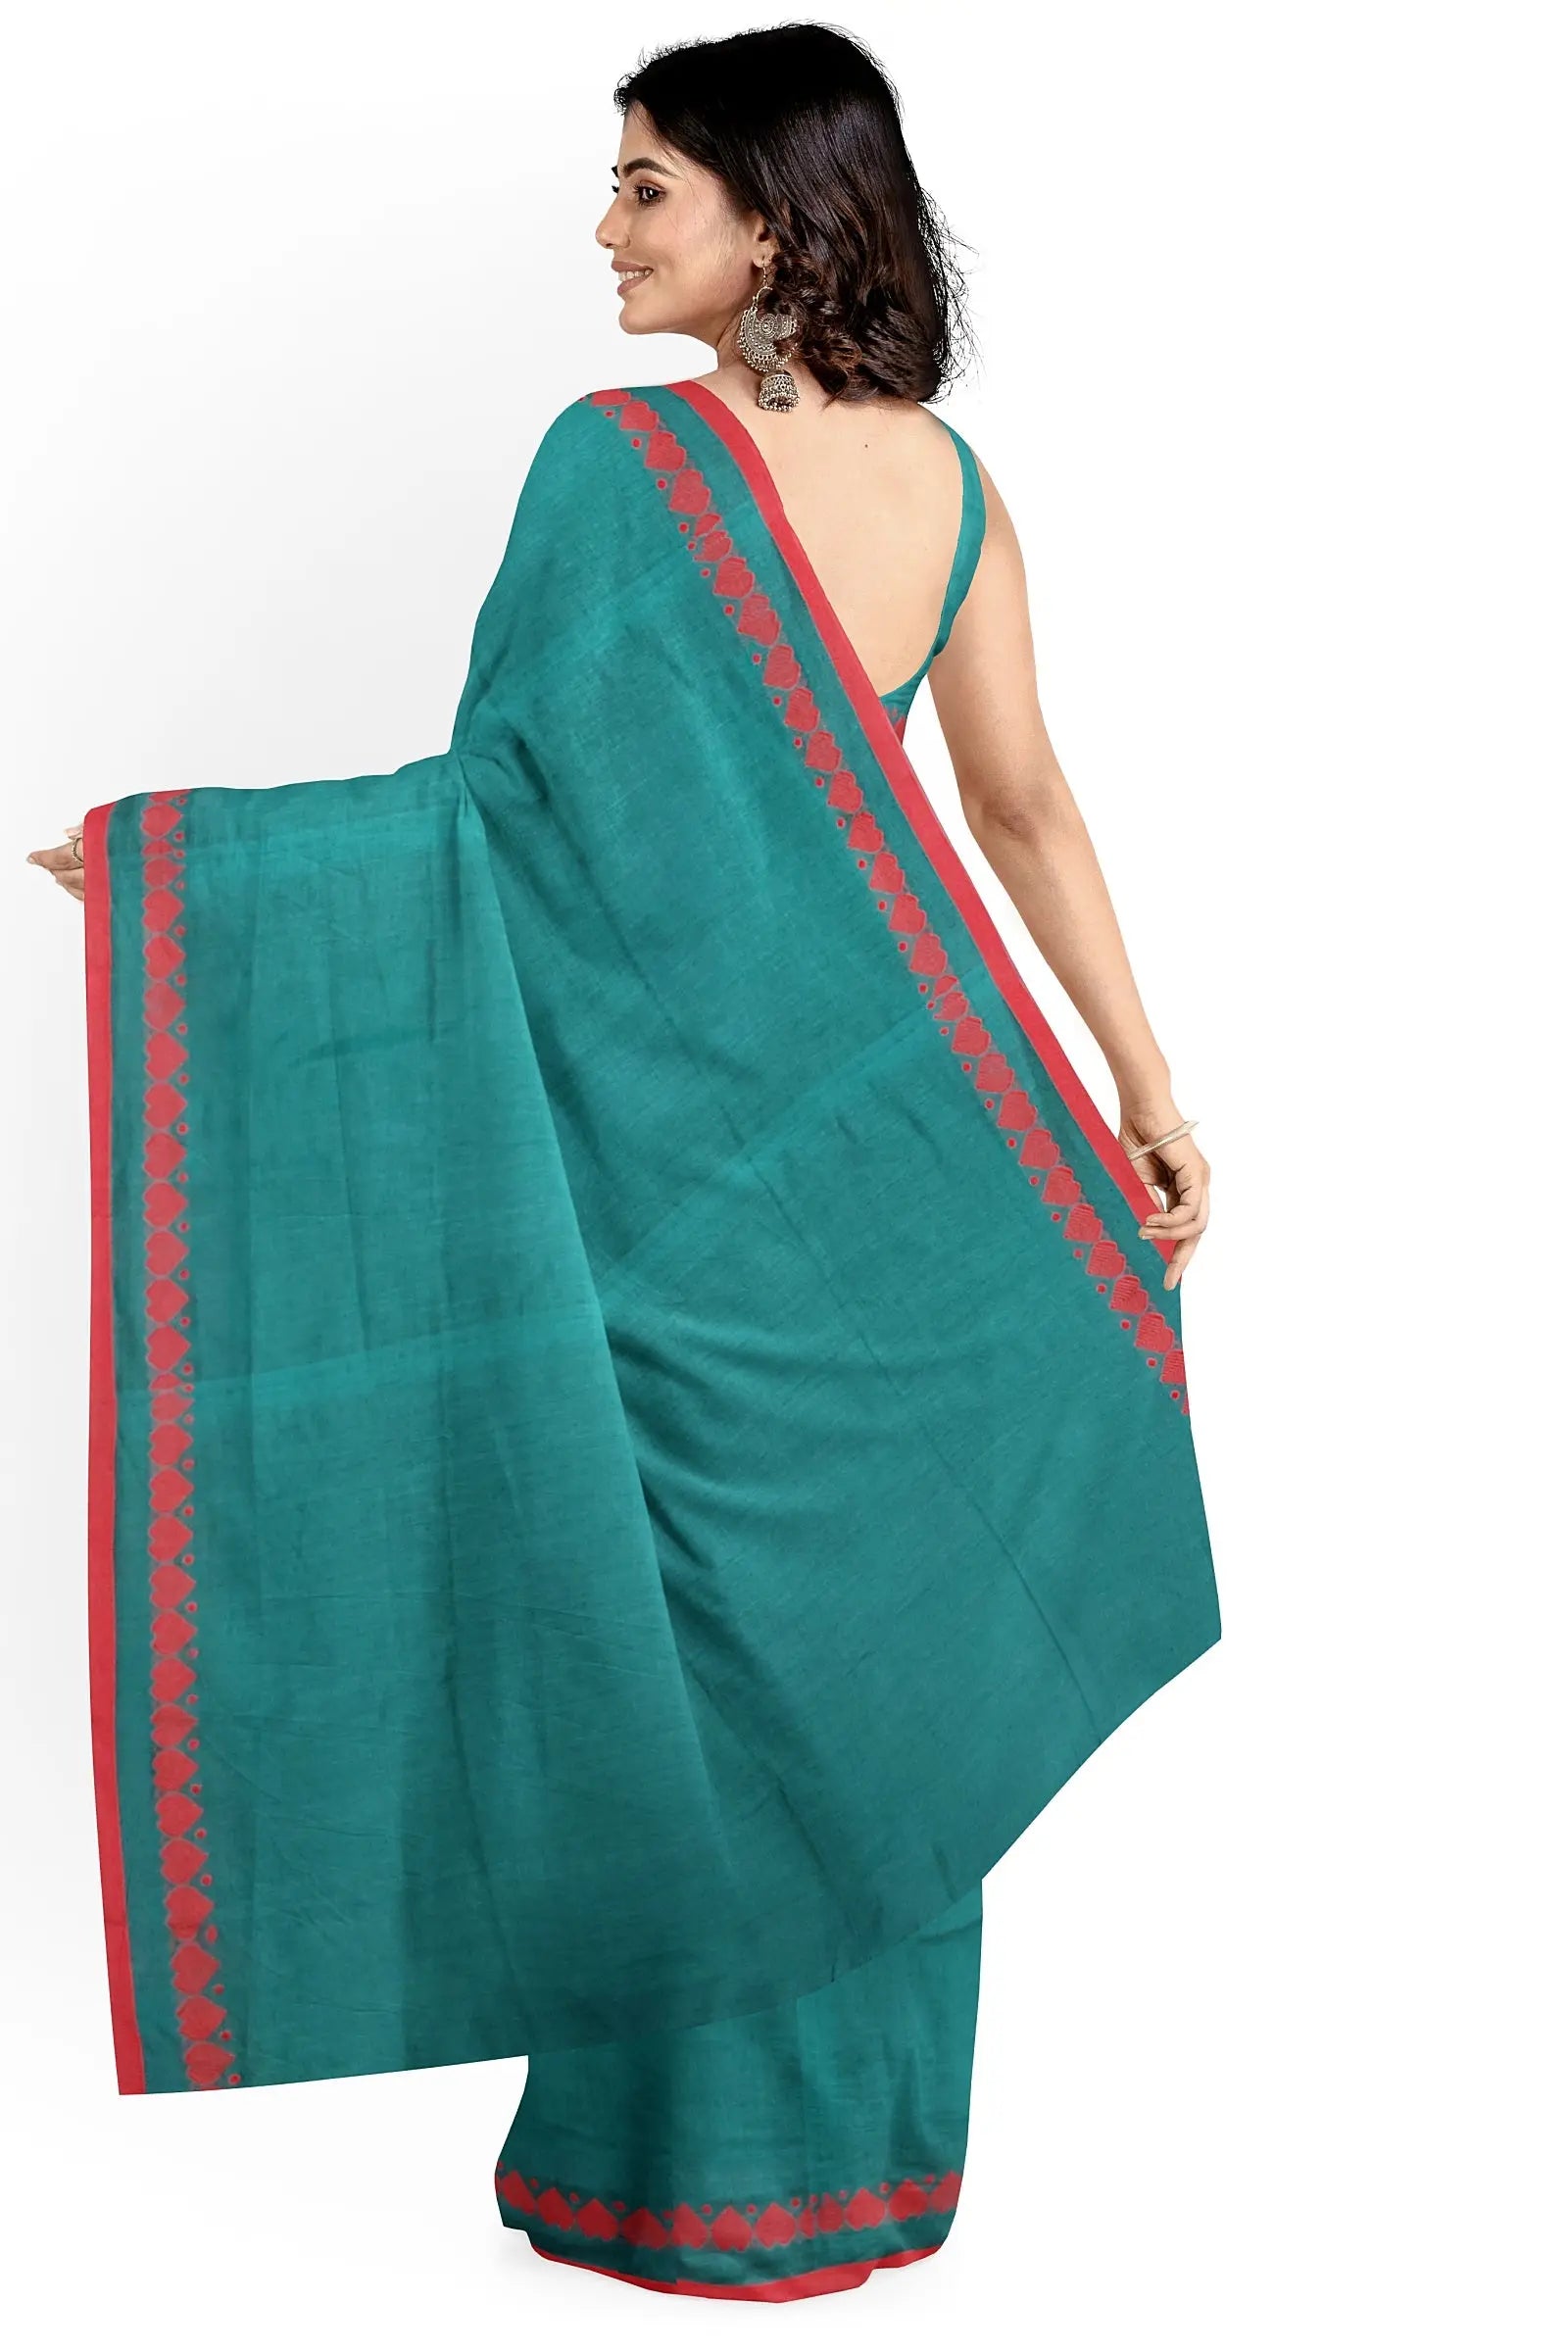 Khadi cotton saree love sea green Putul's fashion